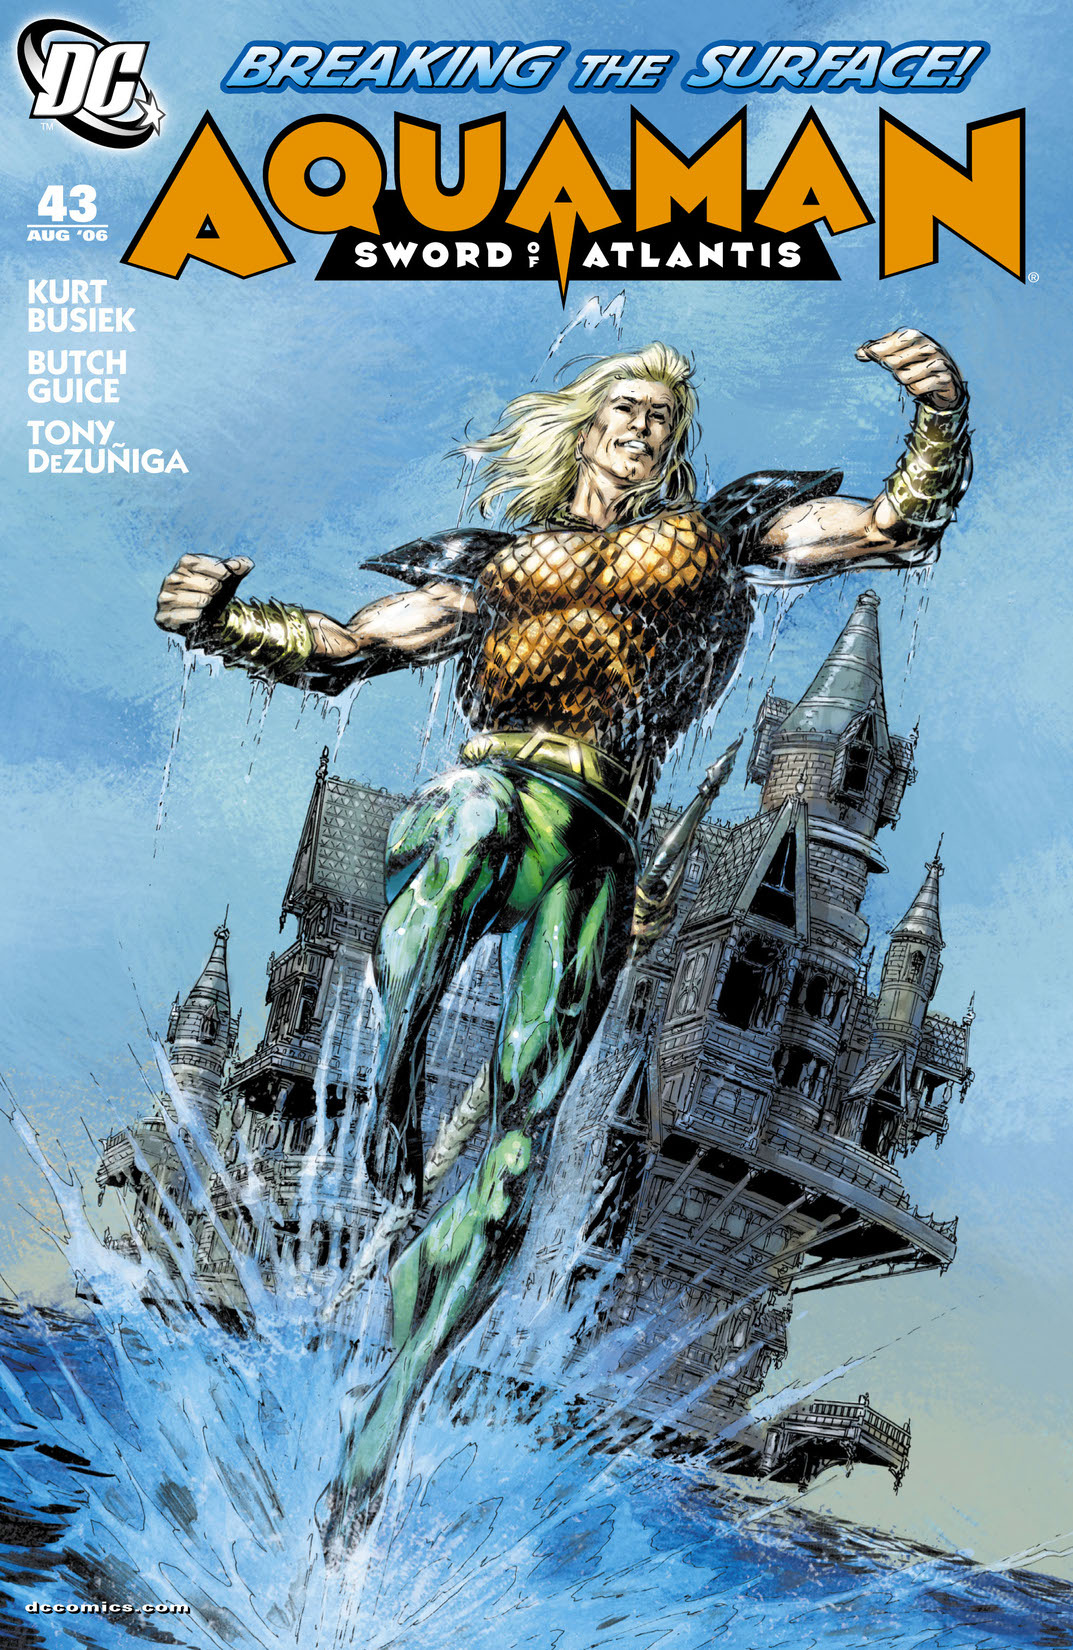 Aquaman: Sword of Atlantis #43 preview images